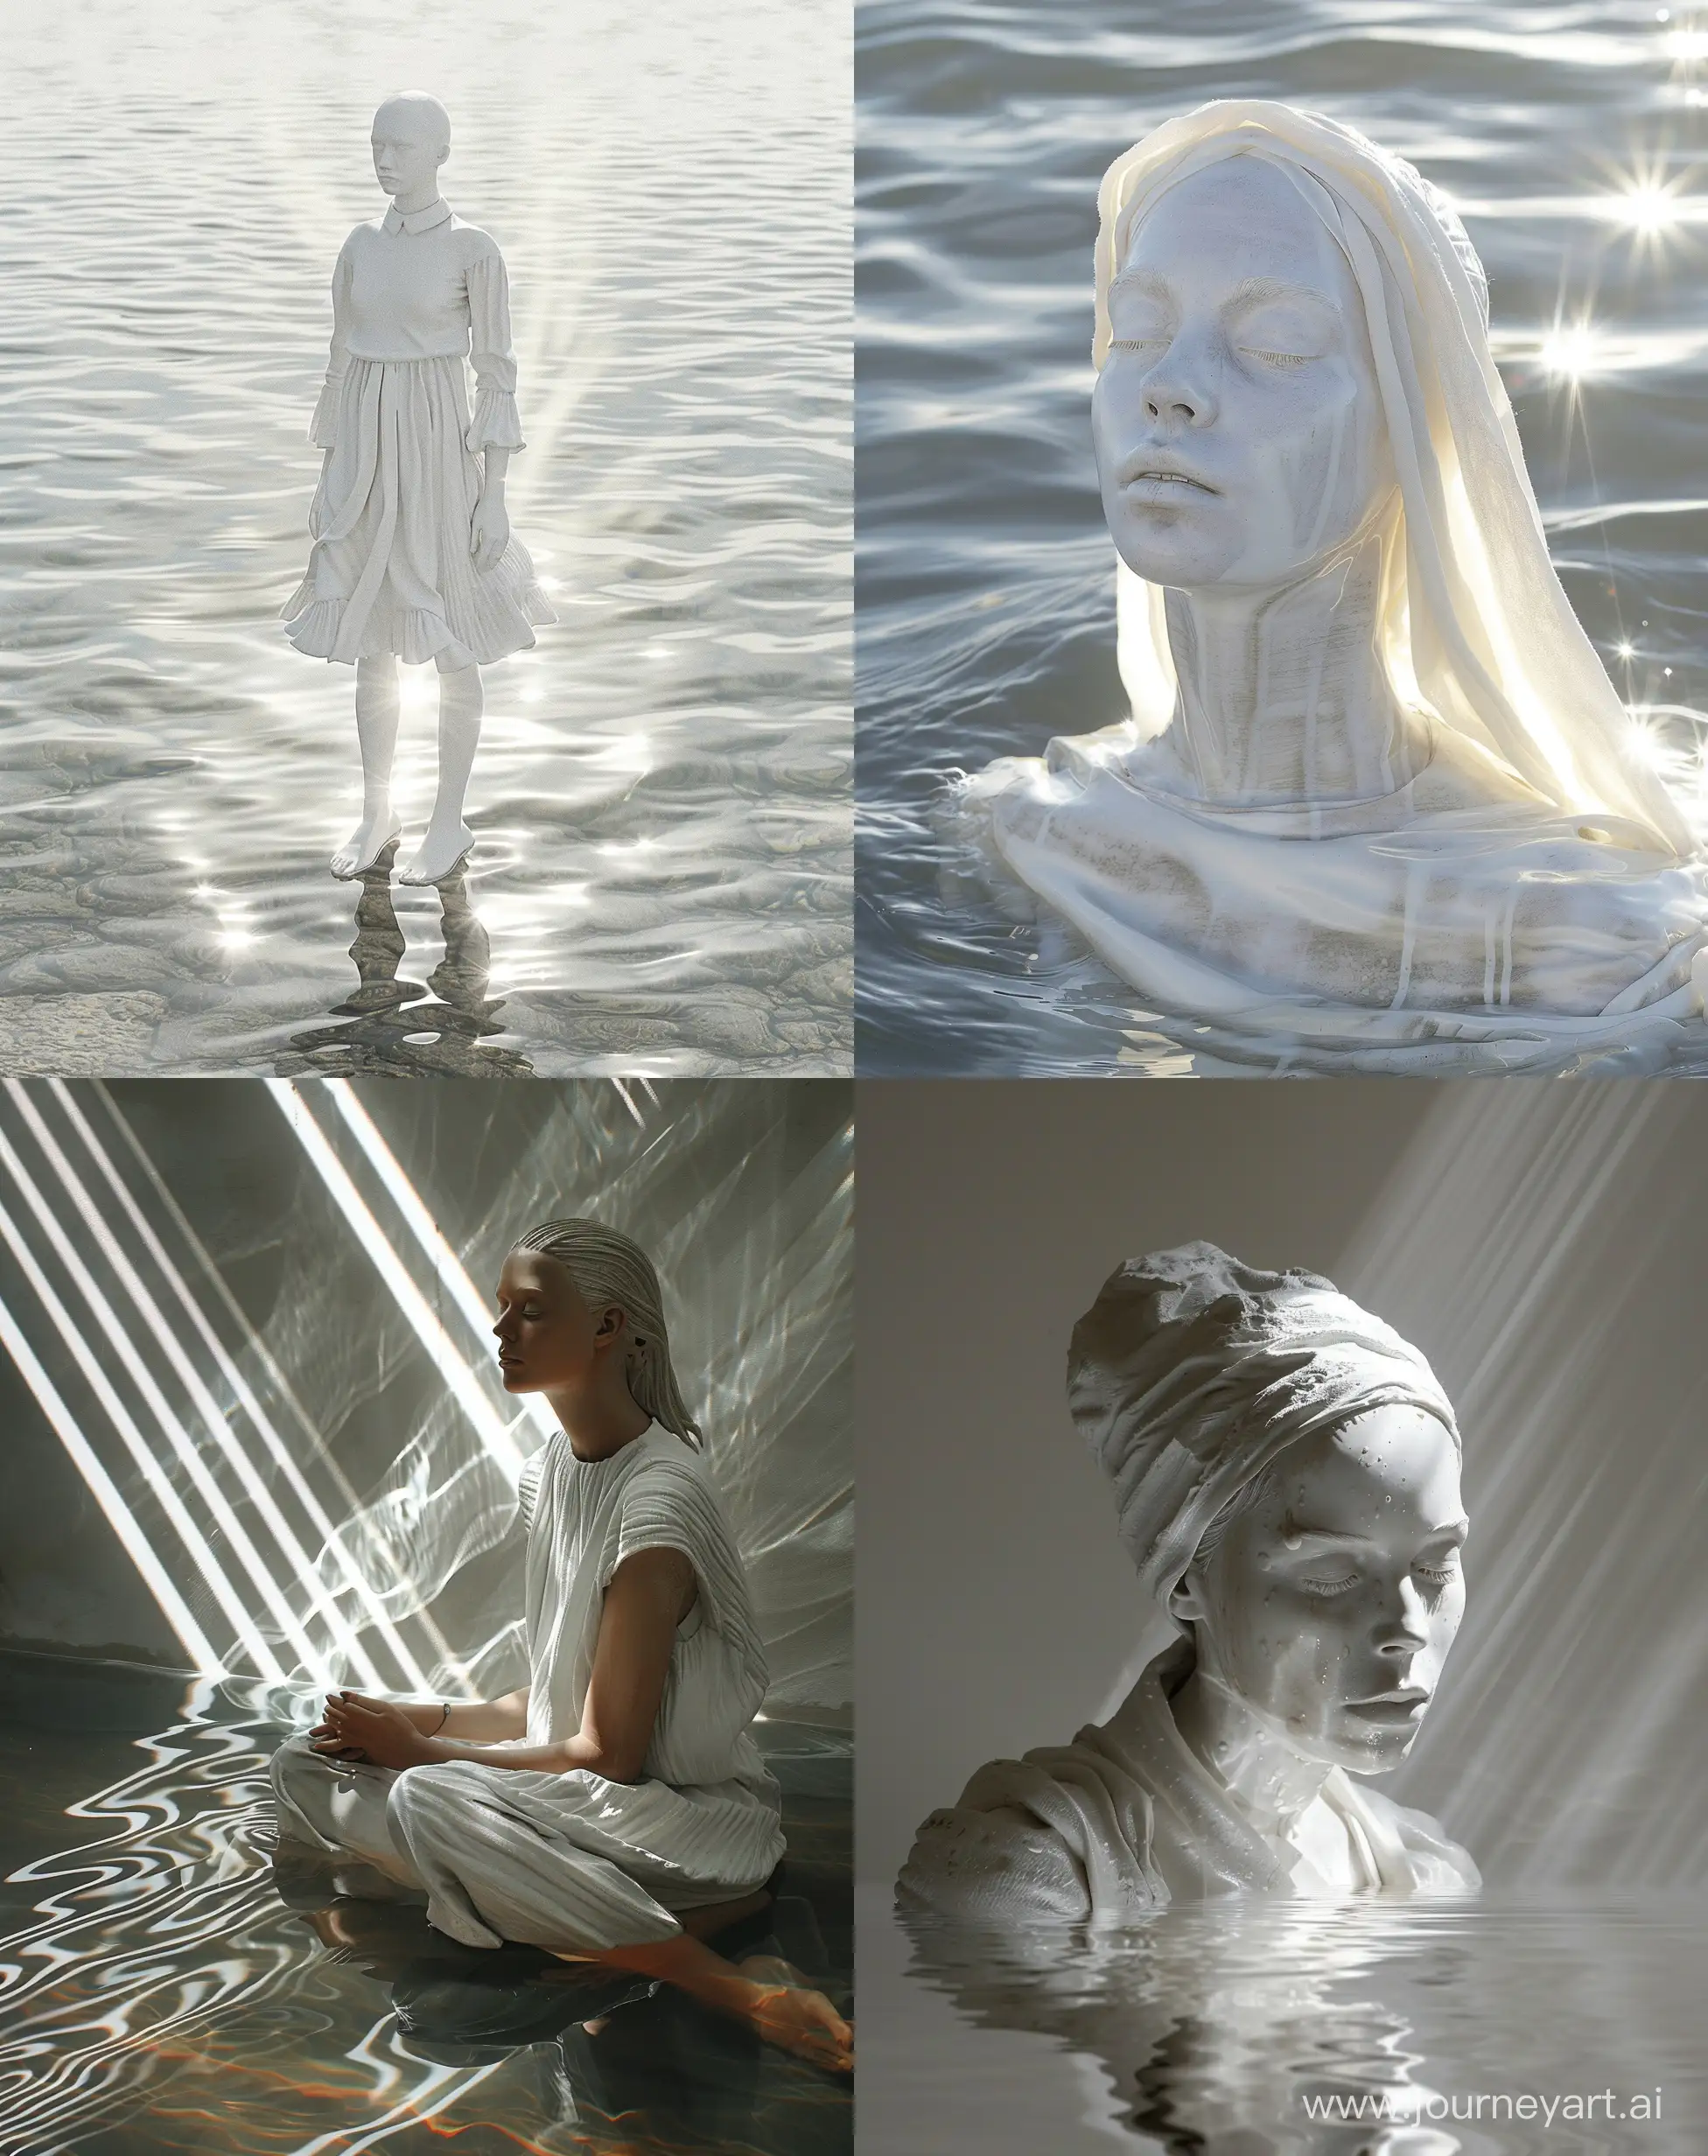 luzerne fashion x rays of light by sebastian rossetti, in the style of yigal ozeri, ursula von rydingsvard, calm waters, white woman, emek golan, terracotta, hyper-realistic water --ar 101:128 